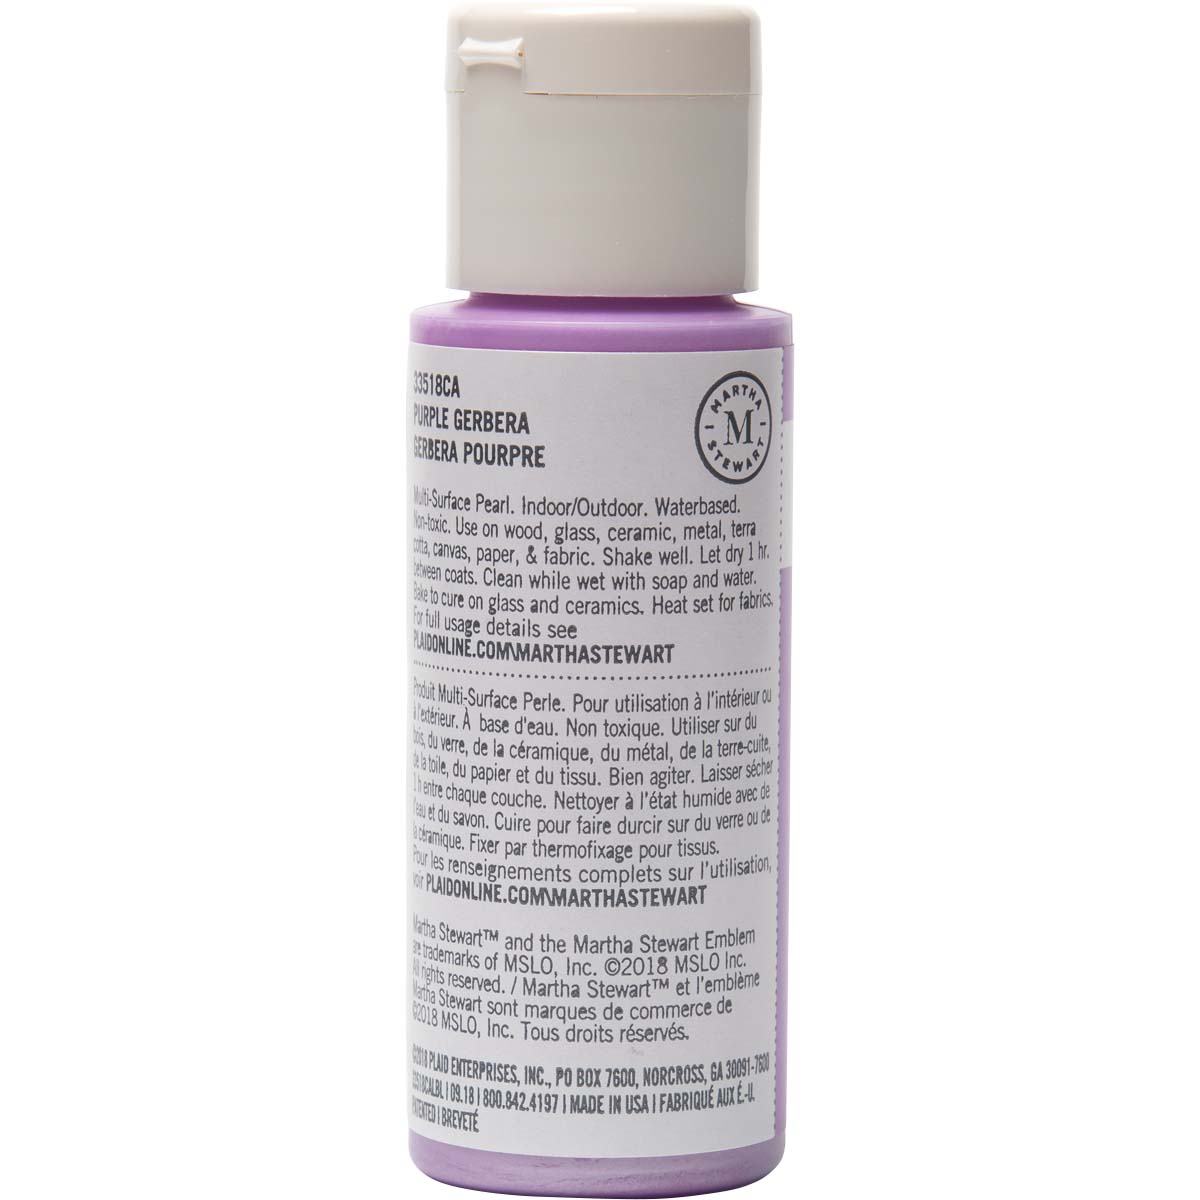 Martha Stewart ® Multi-Surface Pearl Acrylic Craft Paint - Purple Gerberra, 2 oz. - 33518CA